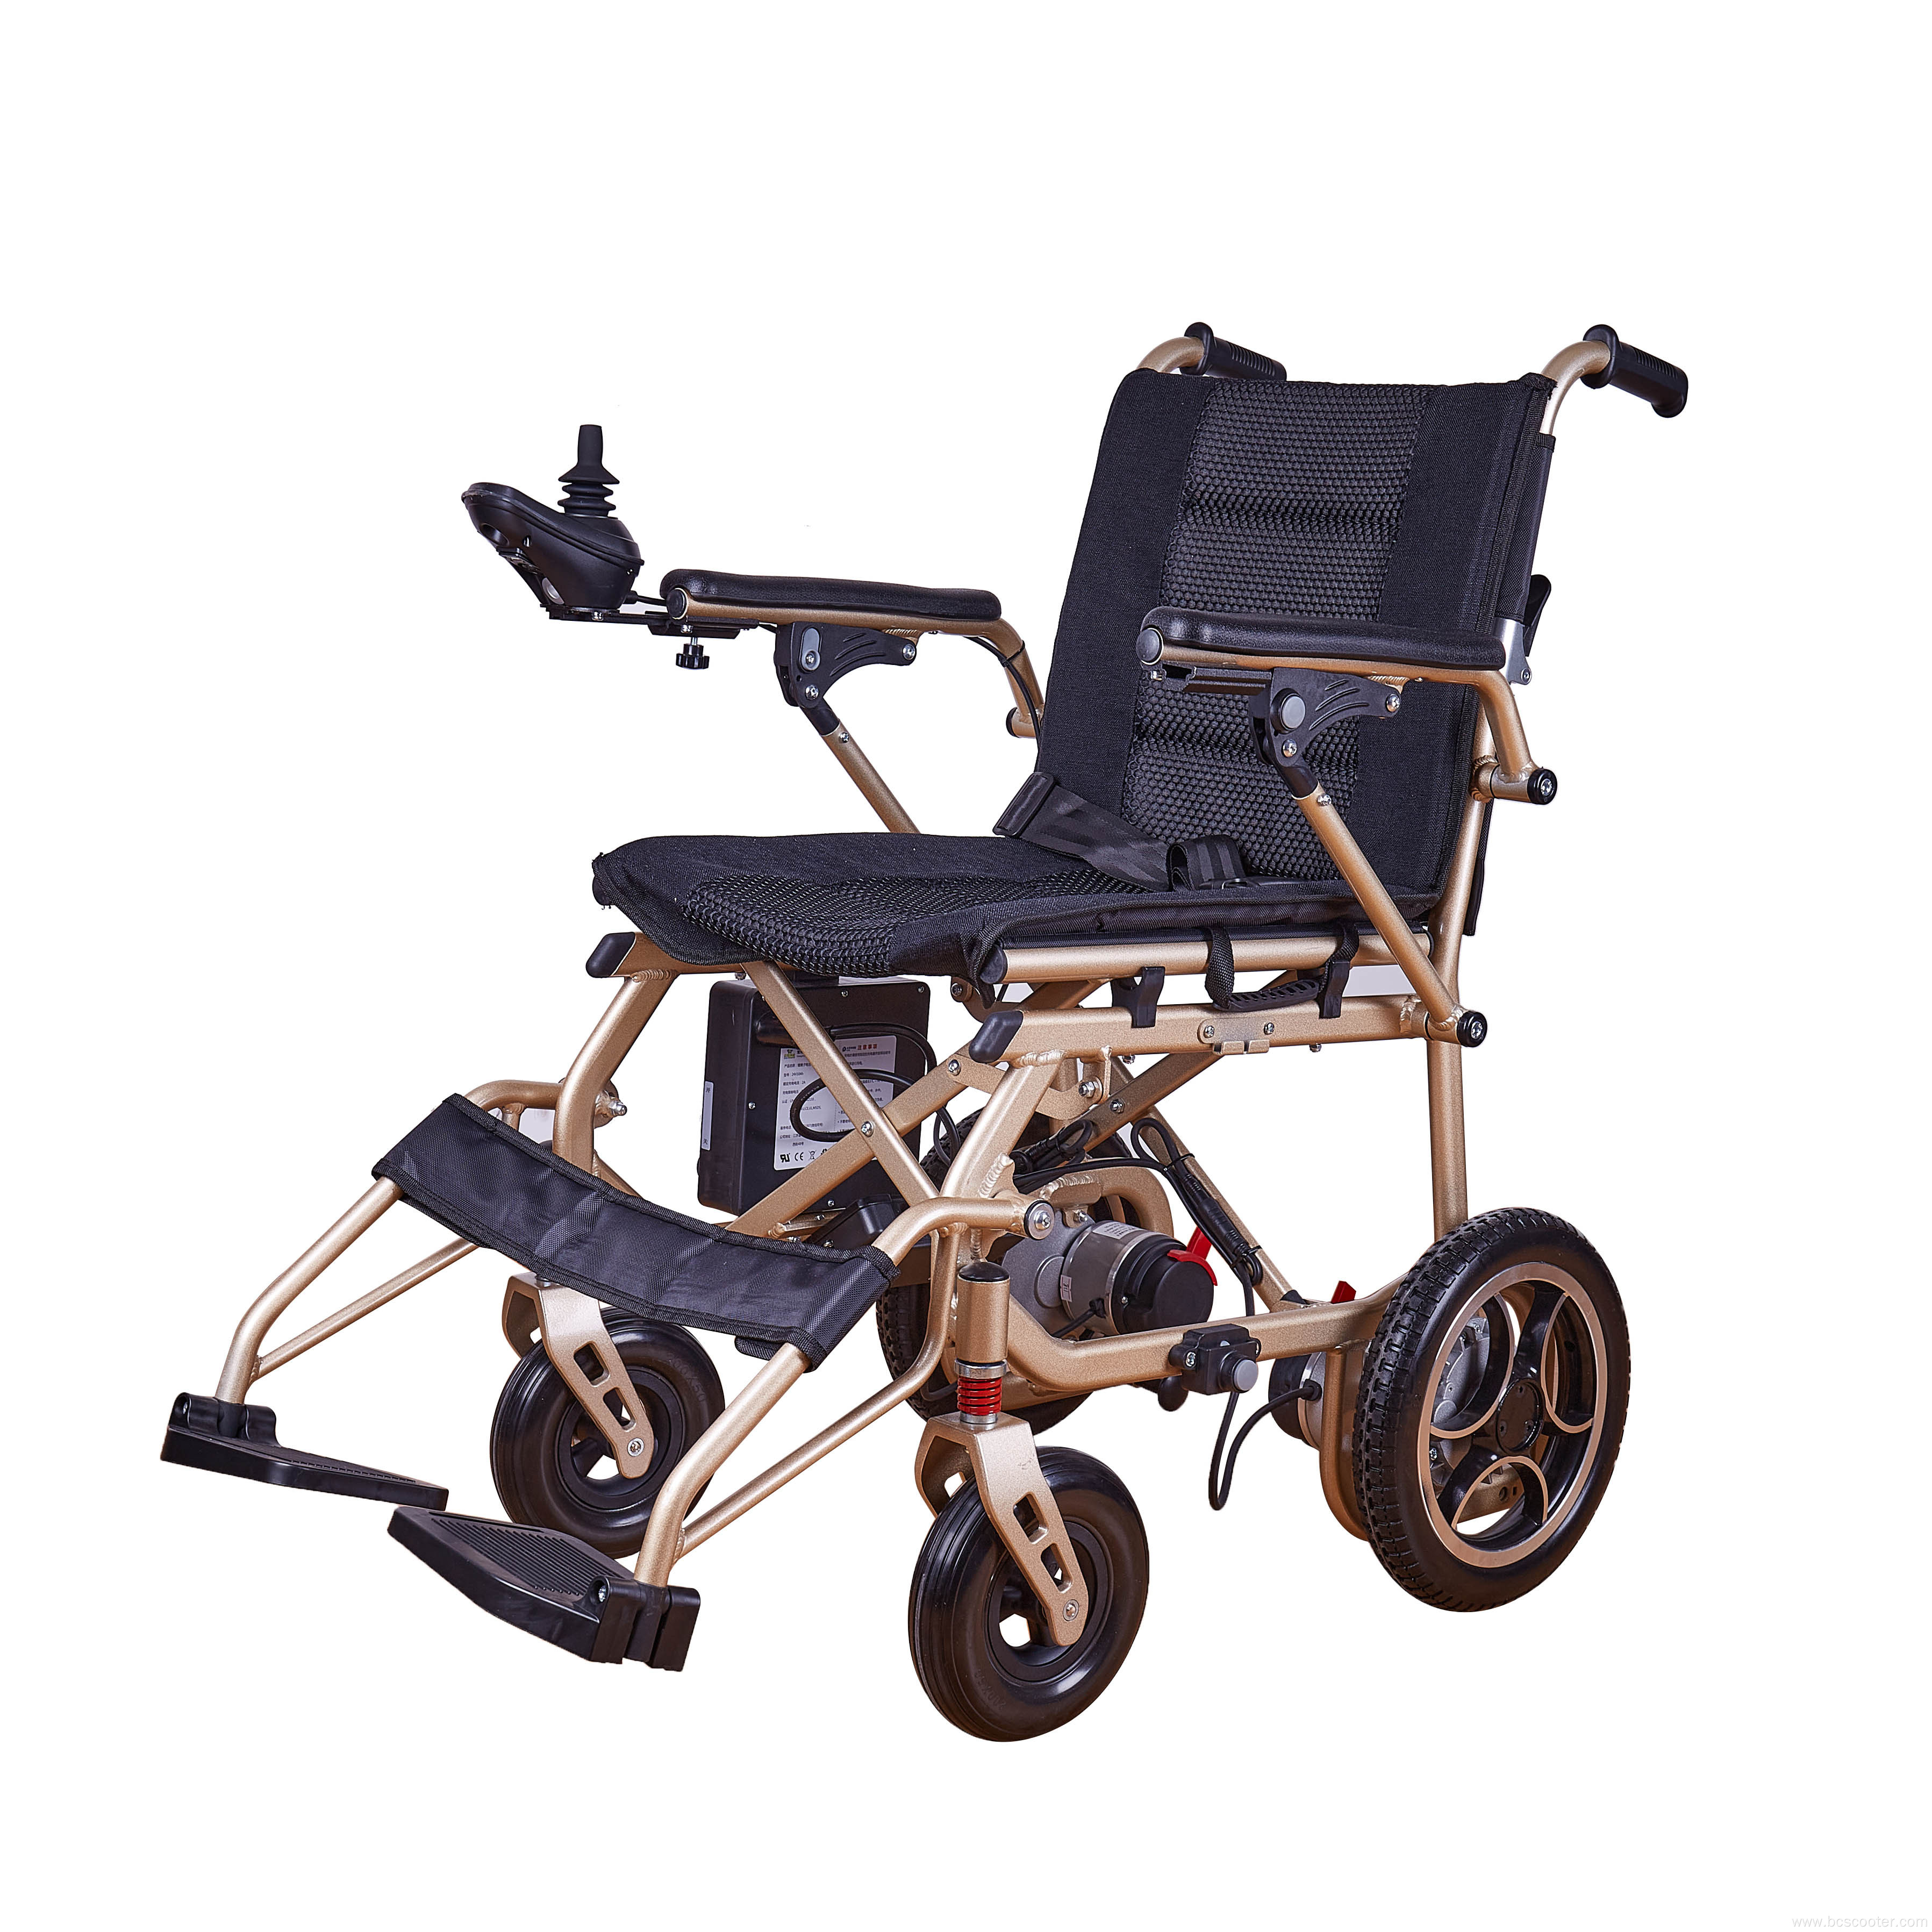 New design Power Wheelchair Adult Light Comfort Wheelchair